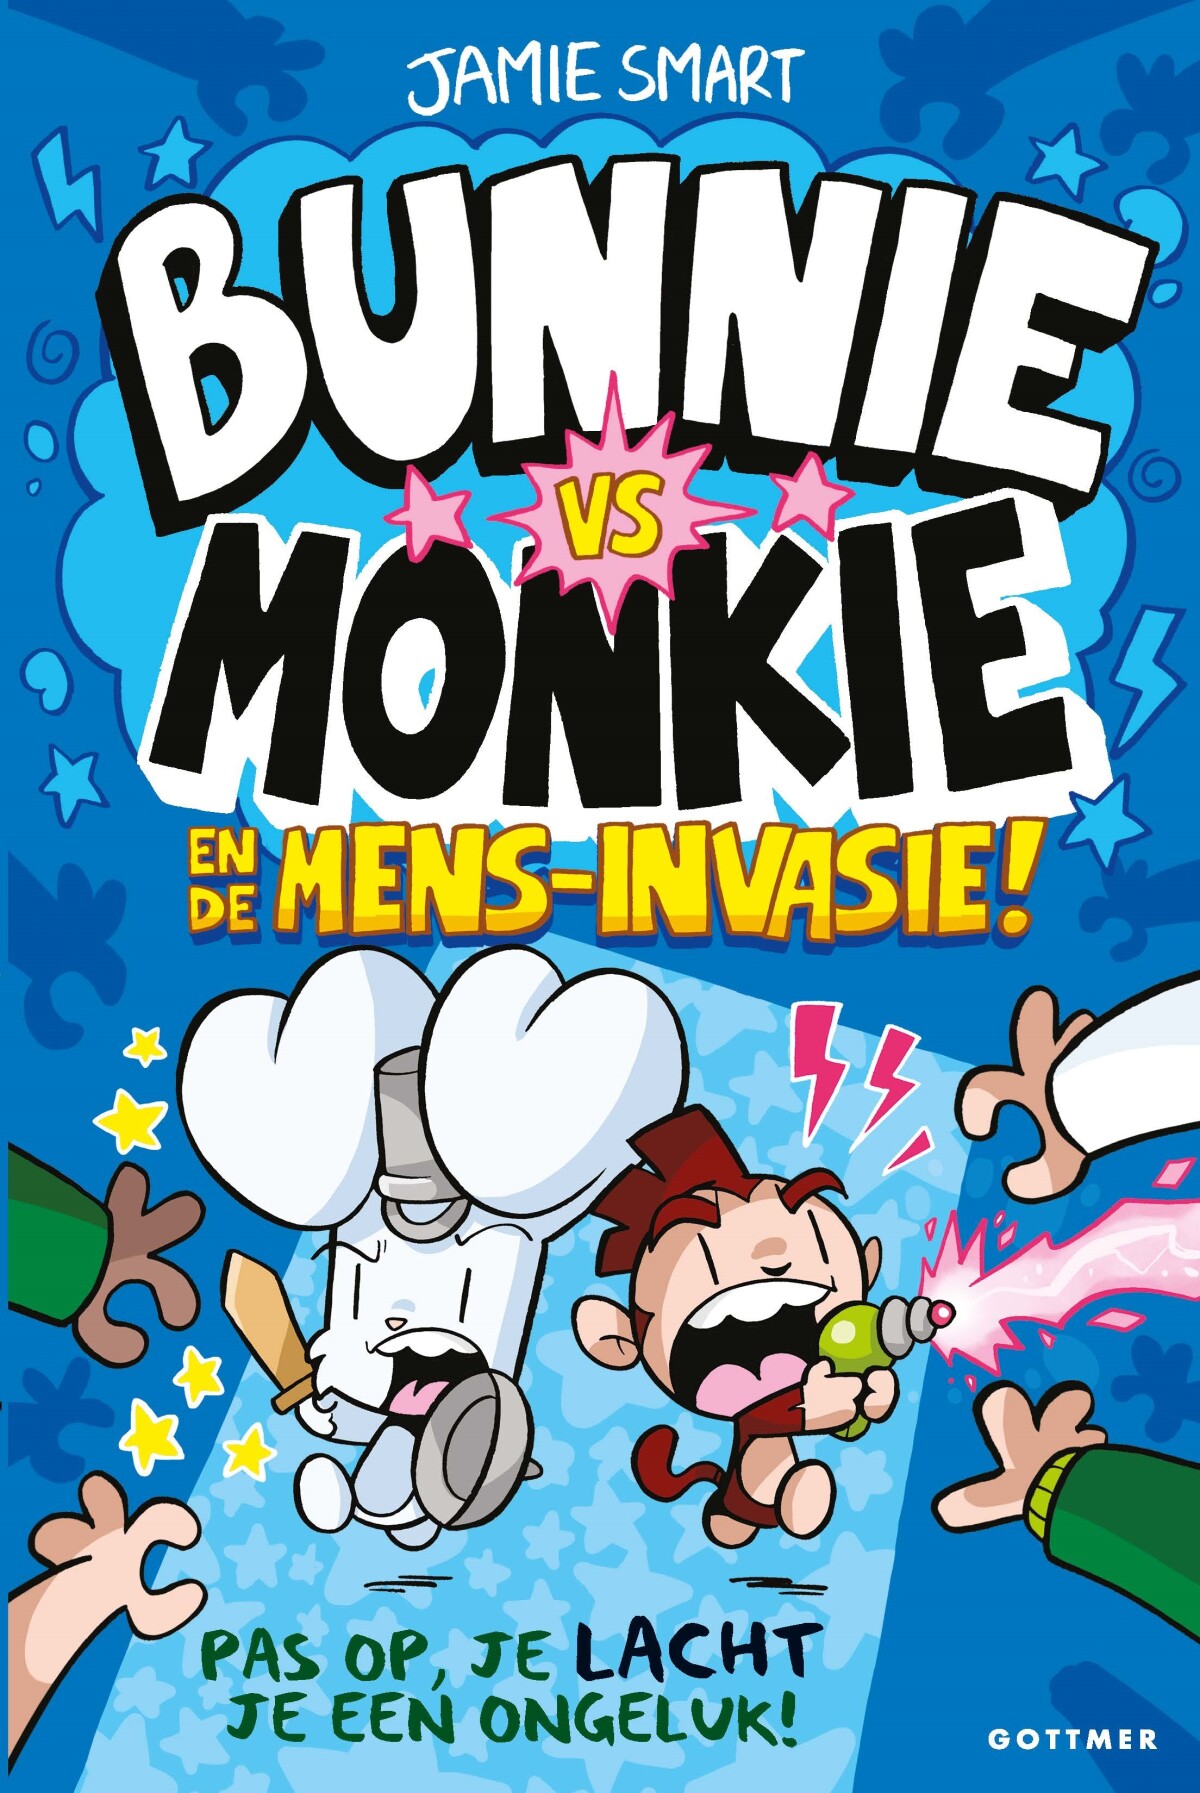 Bunnie vs Monkie en de mens-invasie!